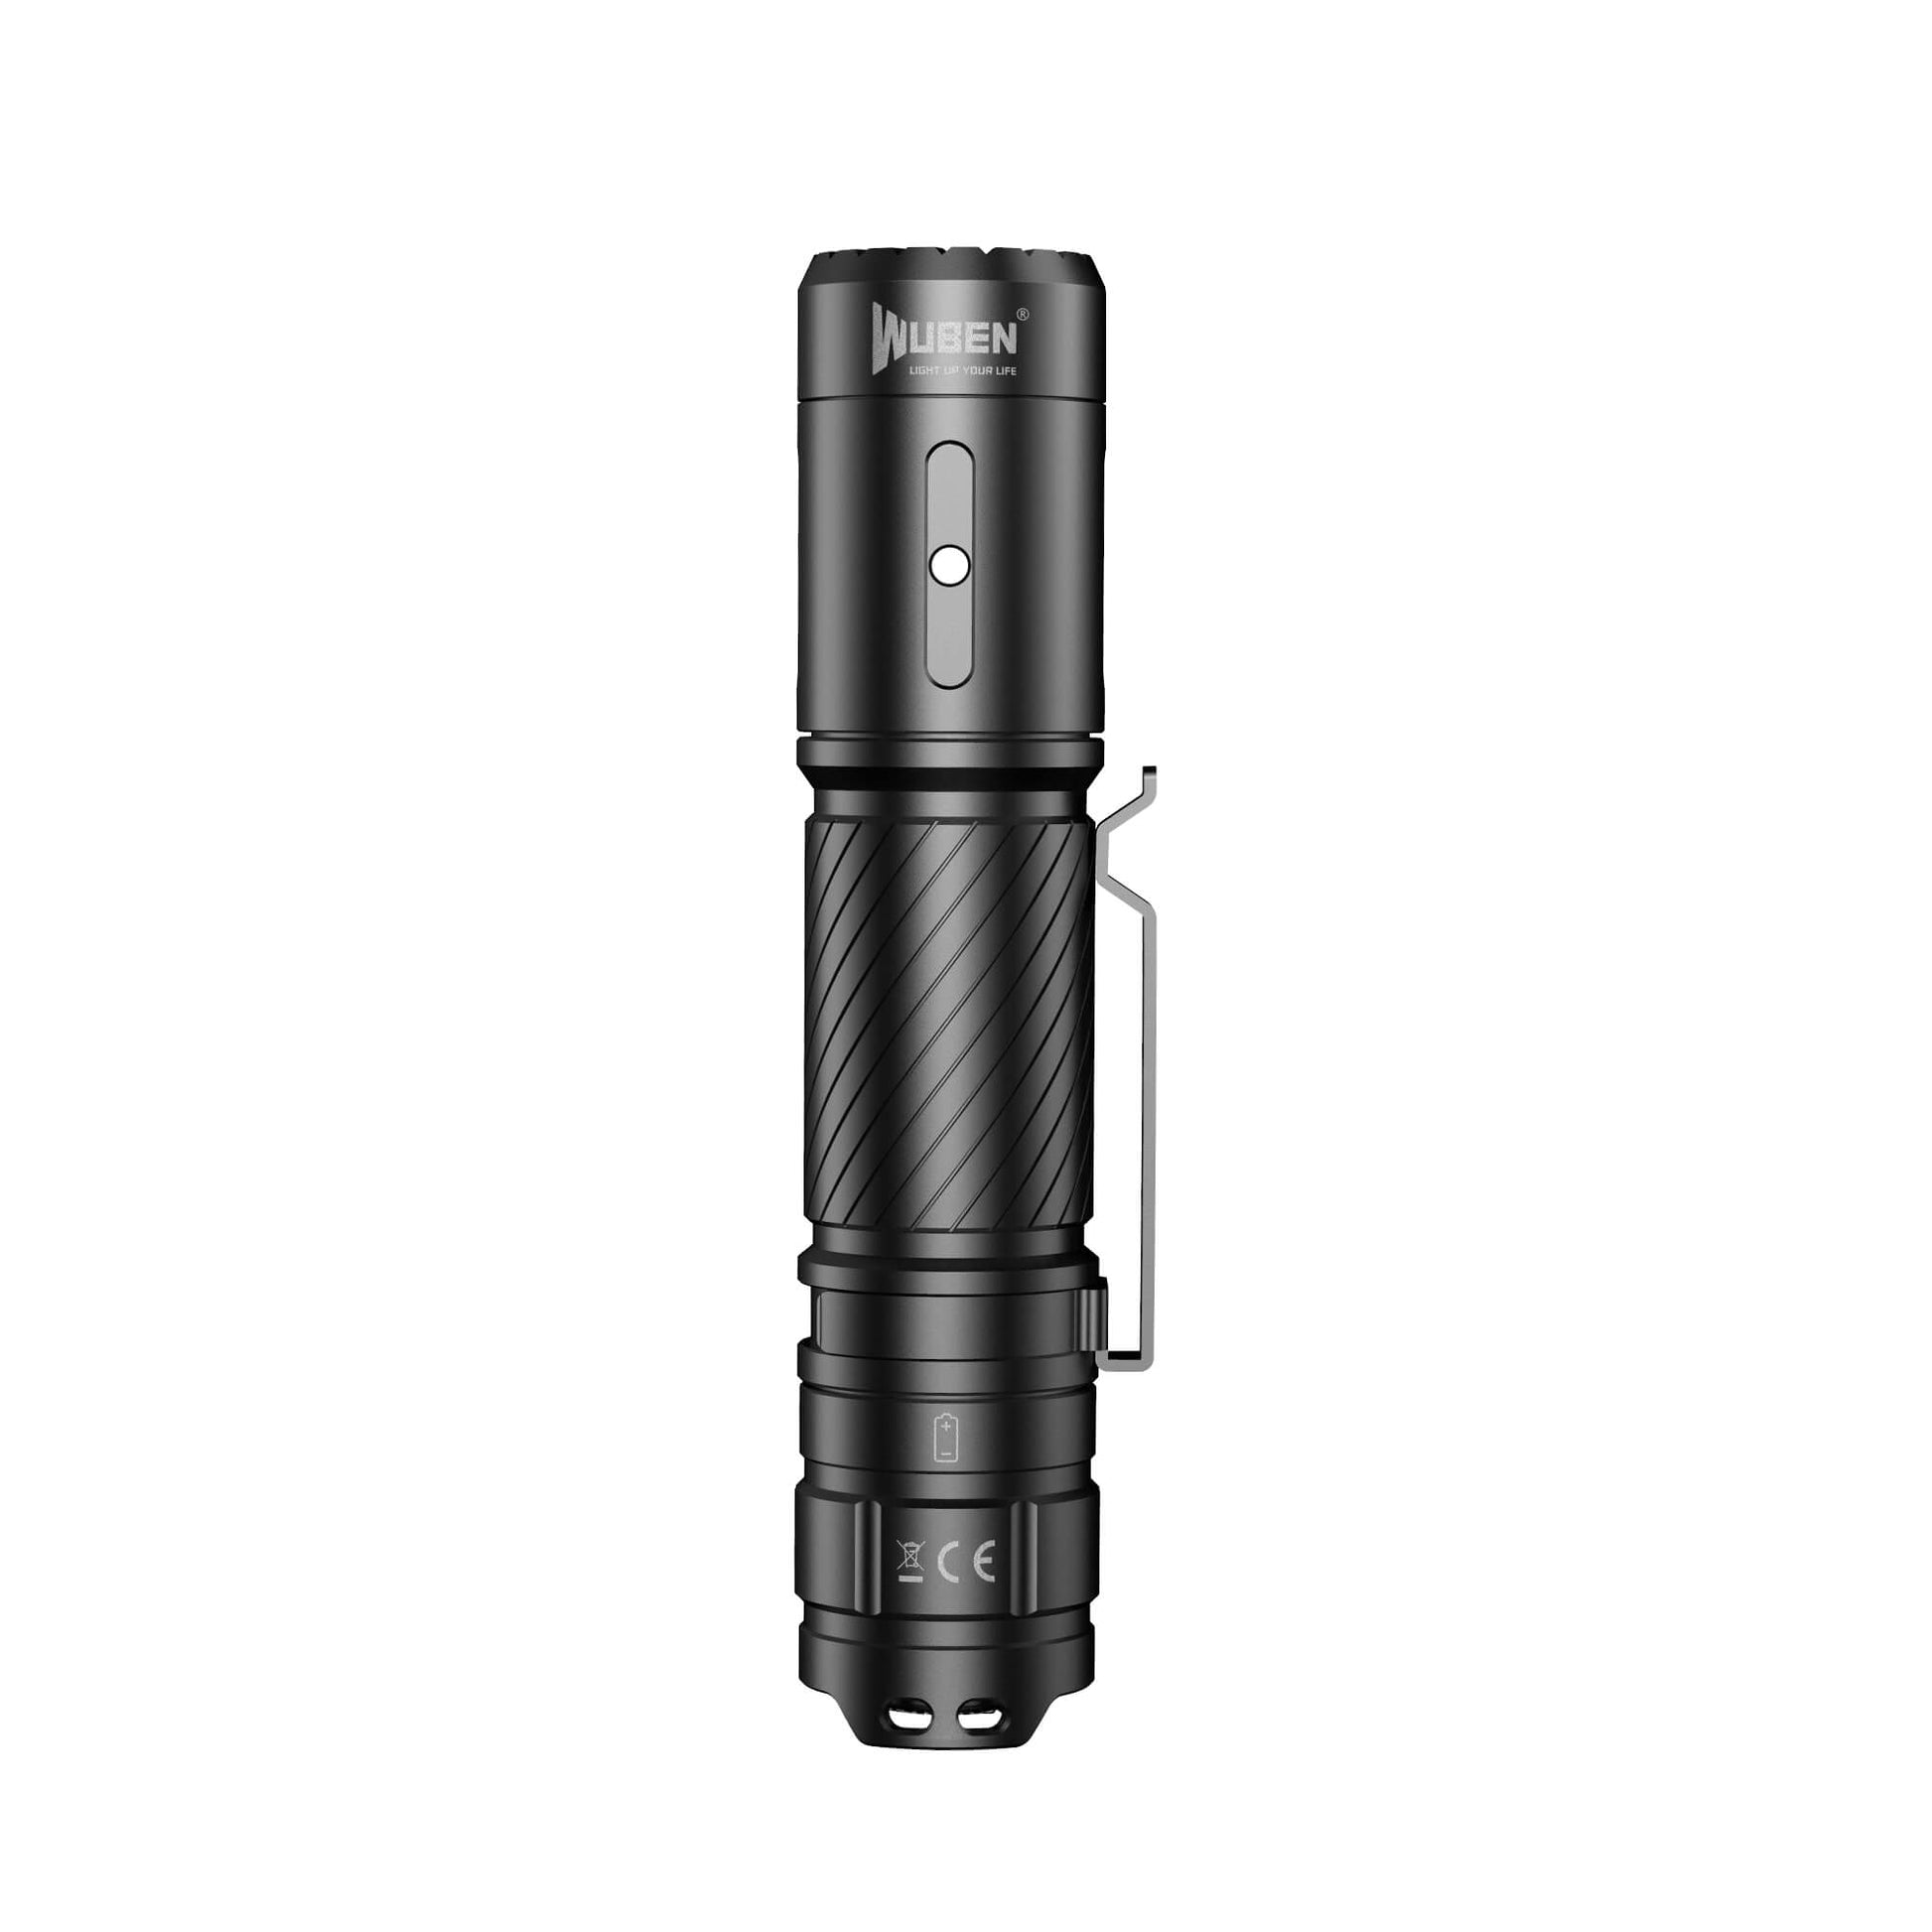 Anyone have an uglier beamshot?! [Wuben C3] : r/flashlight